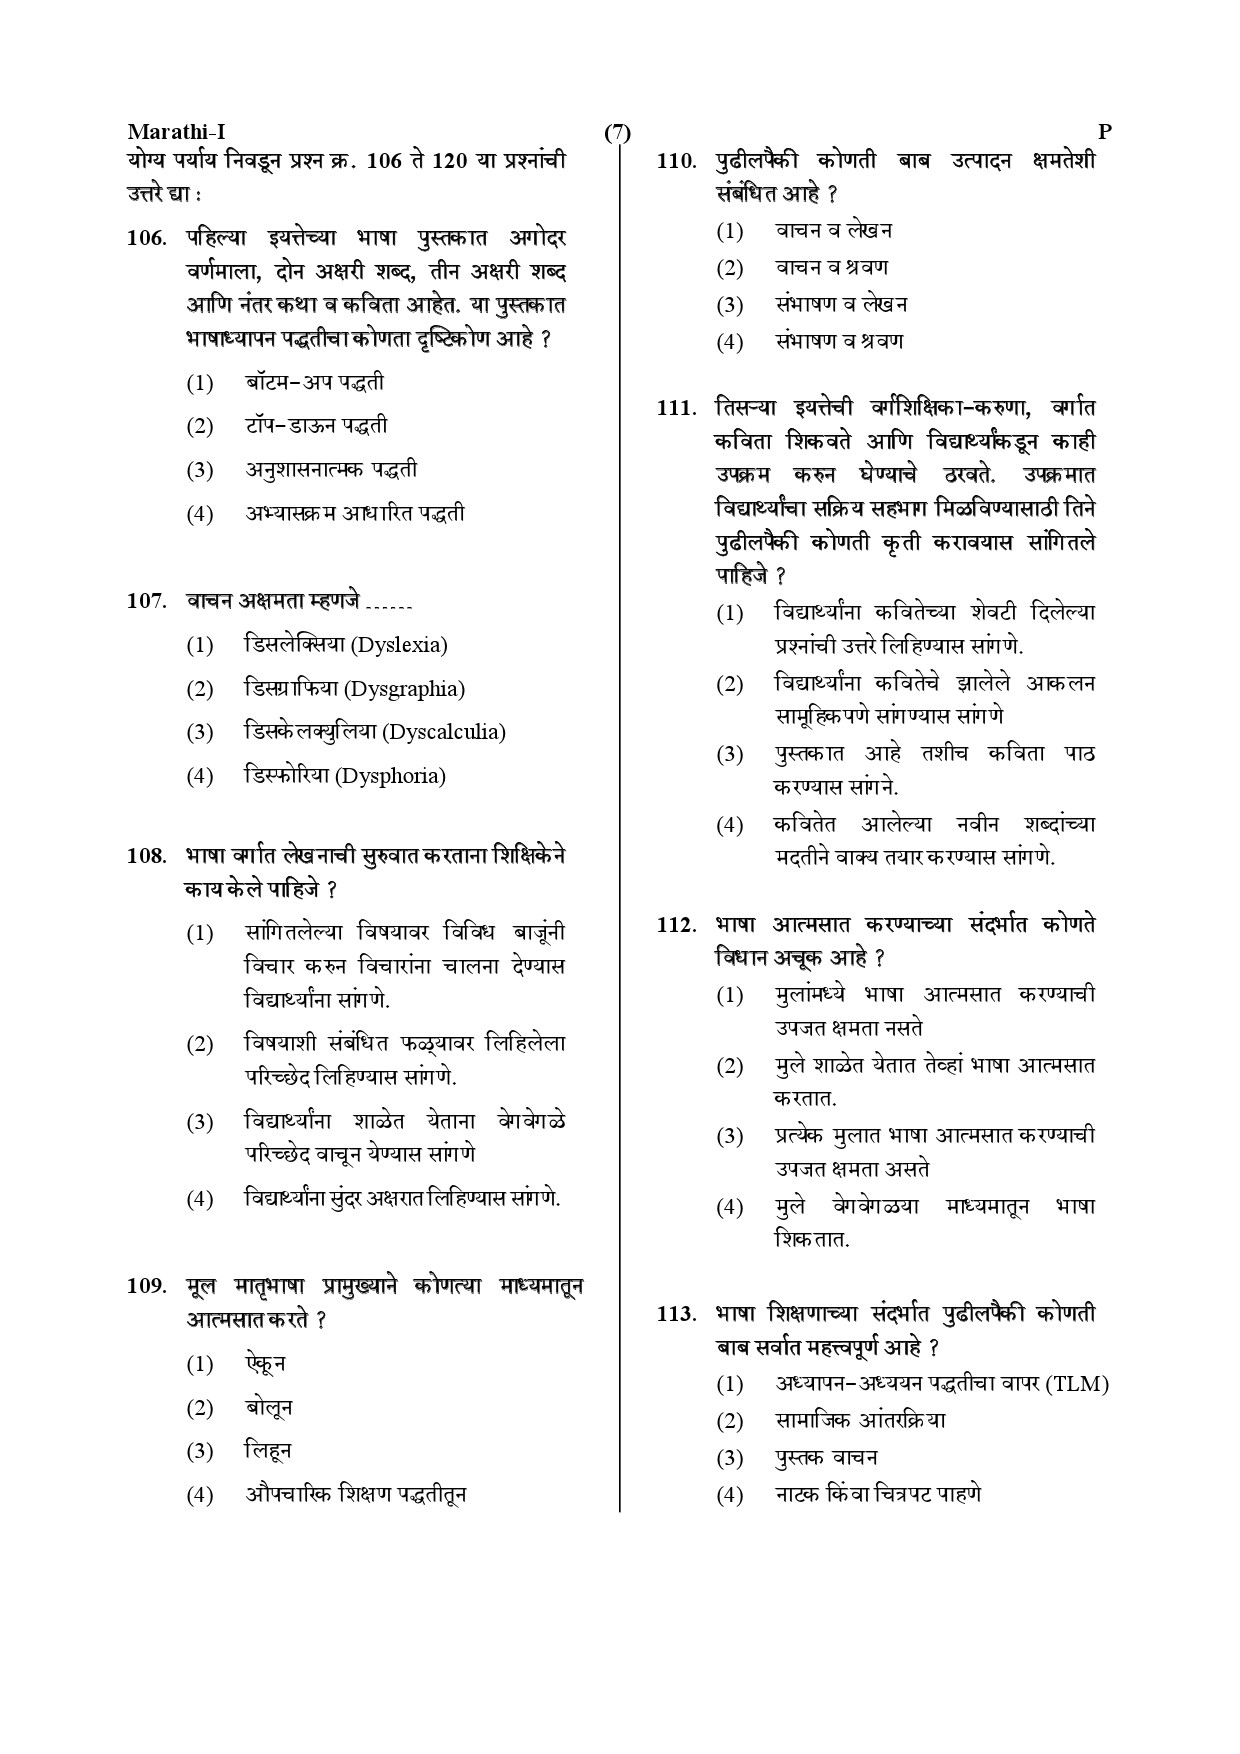 CTET July 2019 Paper 1 Part IV Language 1 Marathi 4